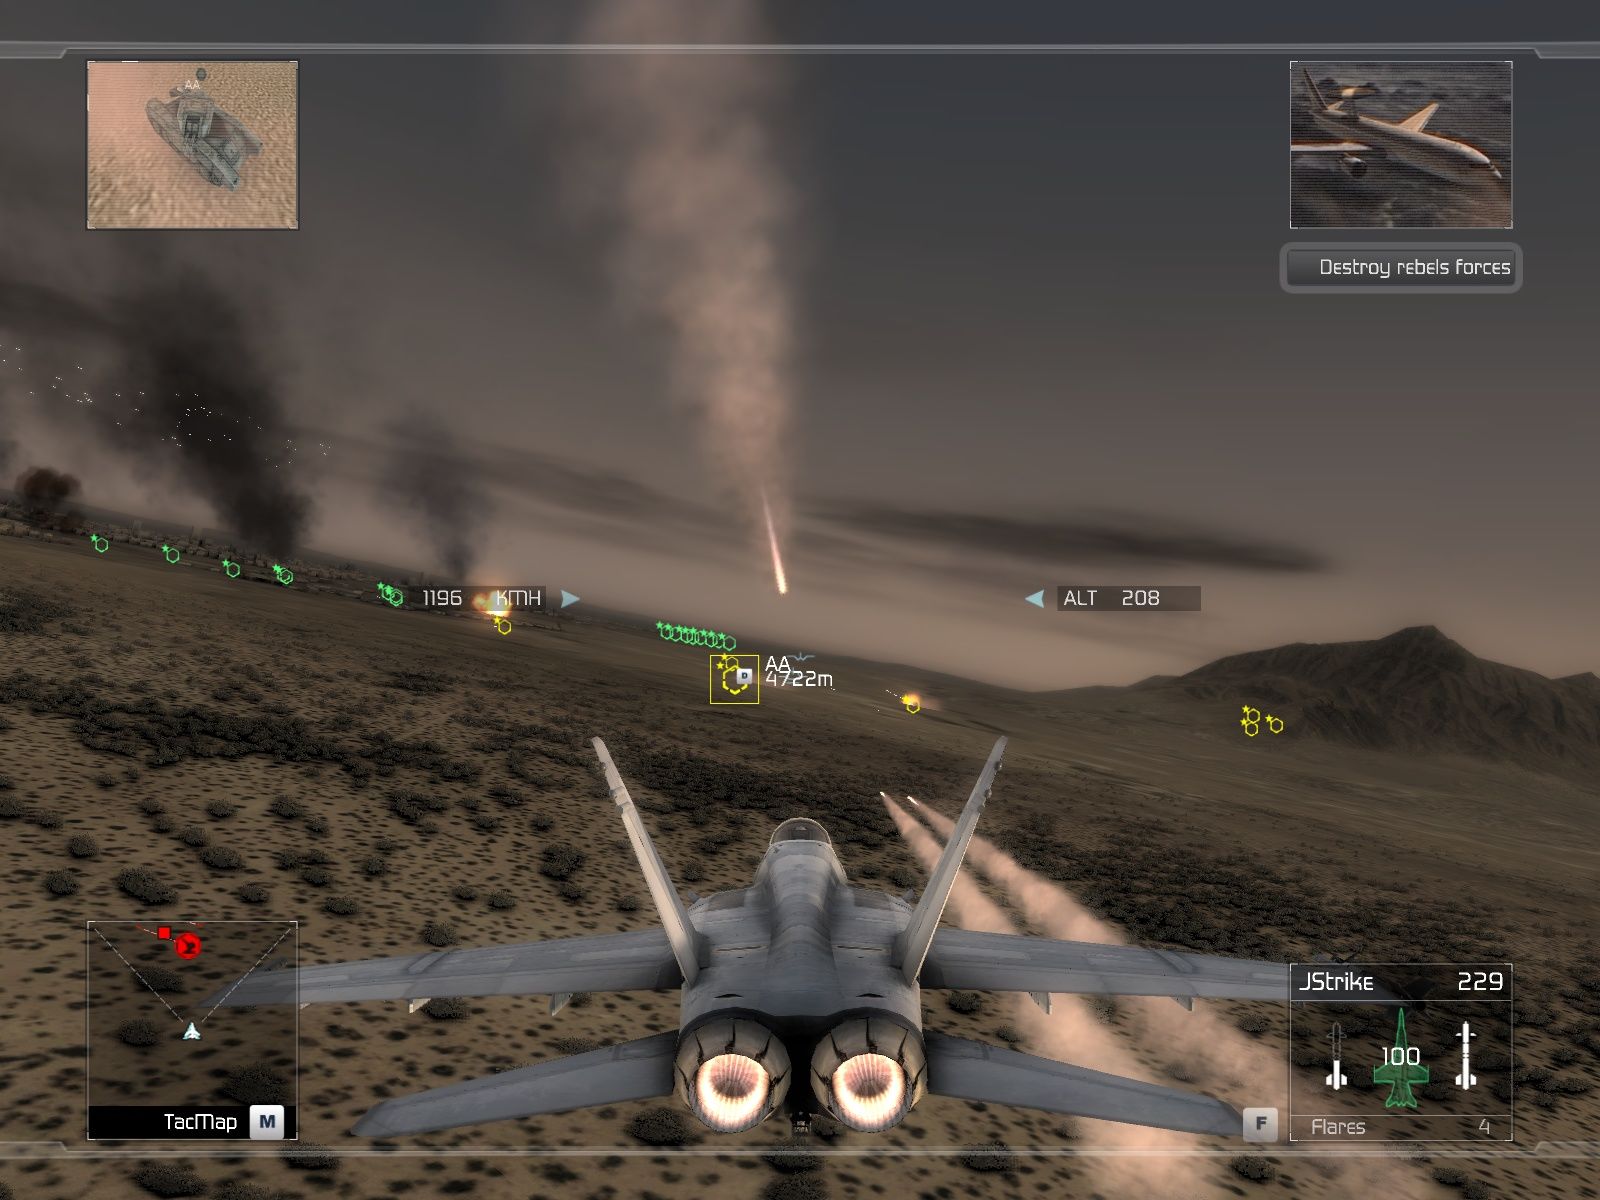 Free air fighter jet combat simulator pc game download - jesmid